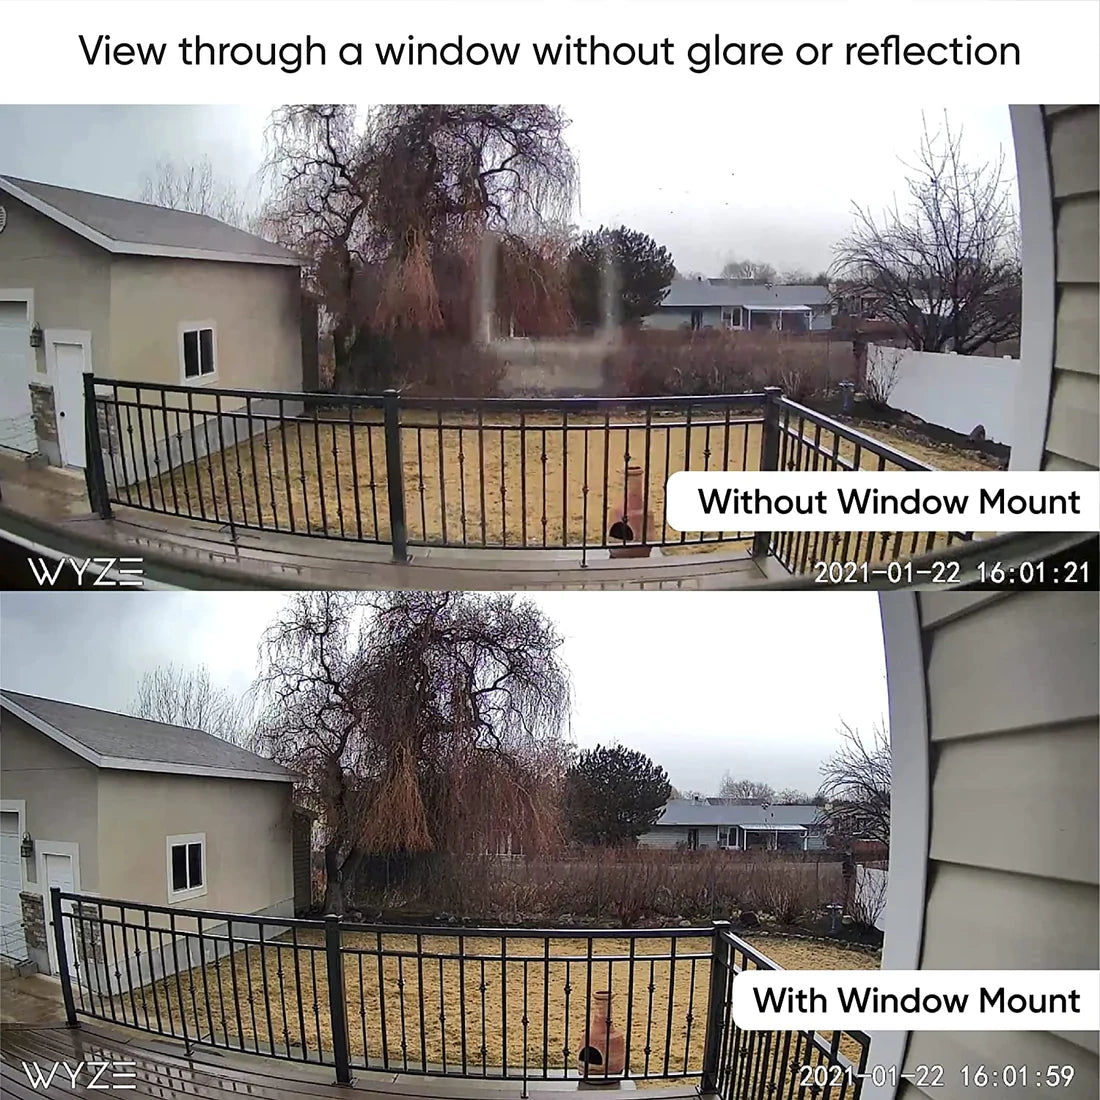 Window Mount for Wyze Cam v3